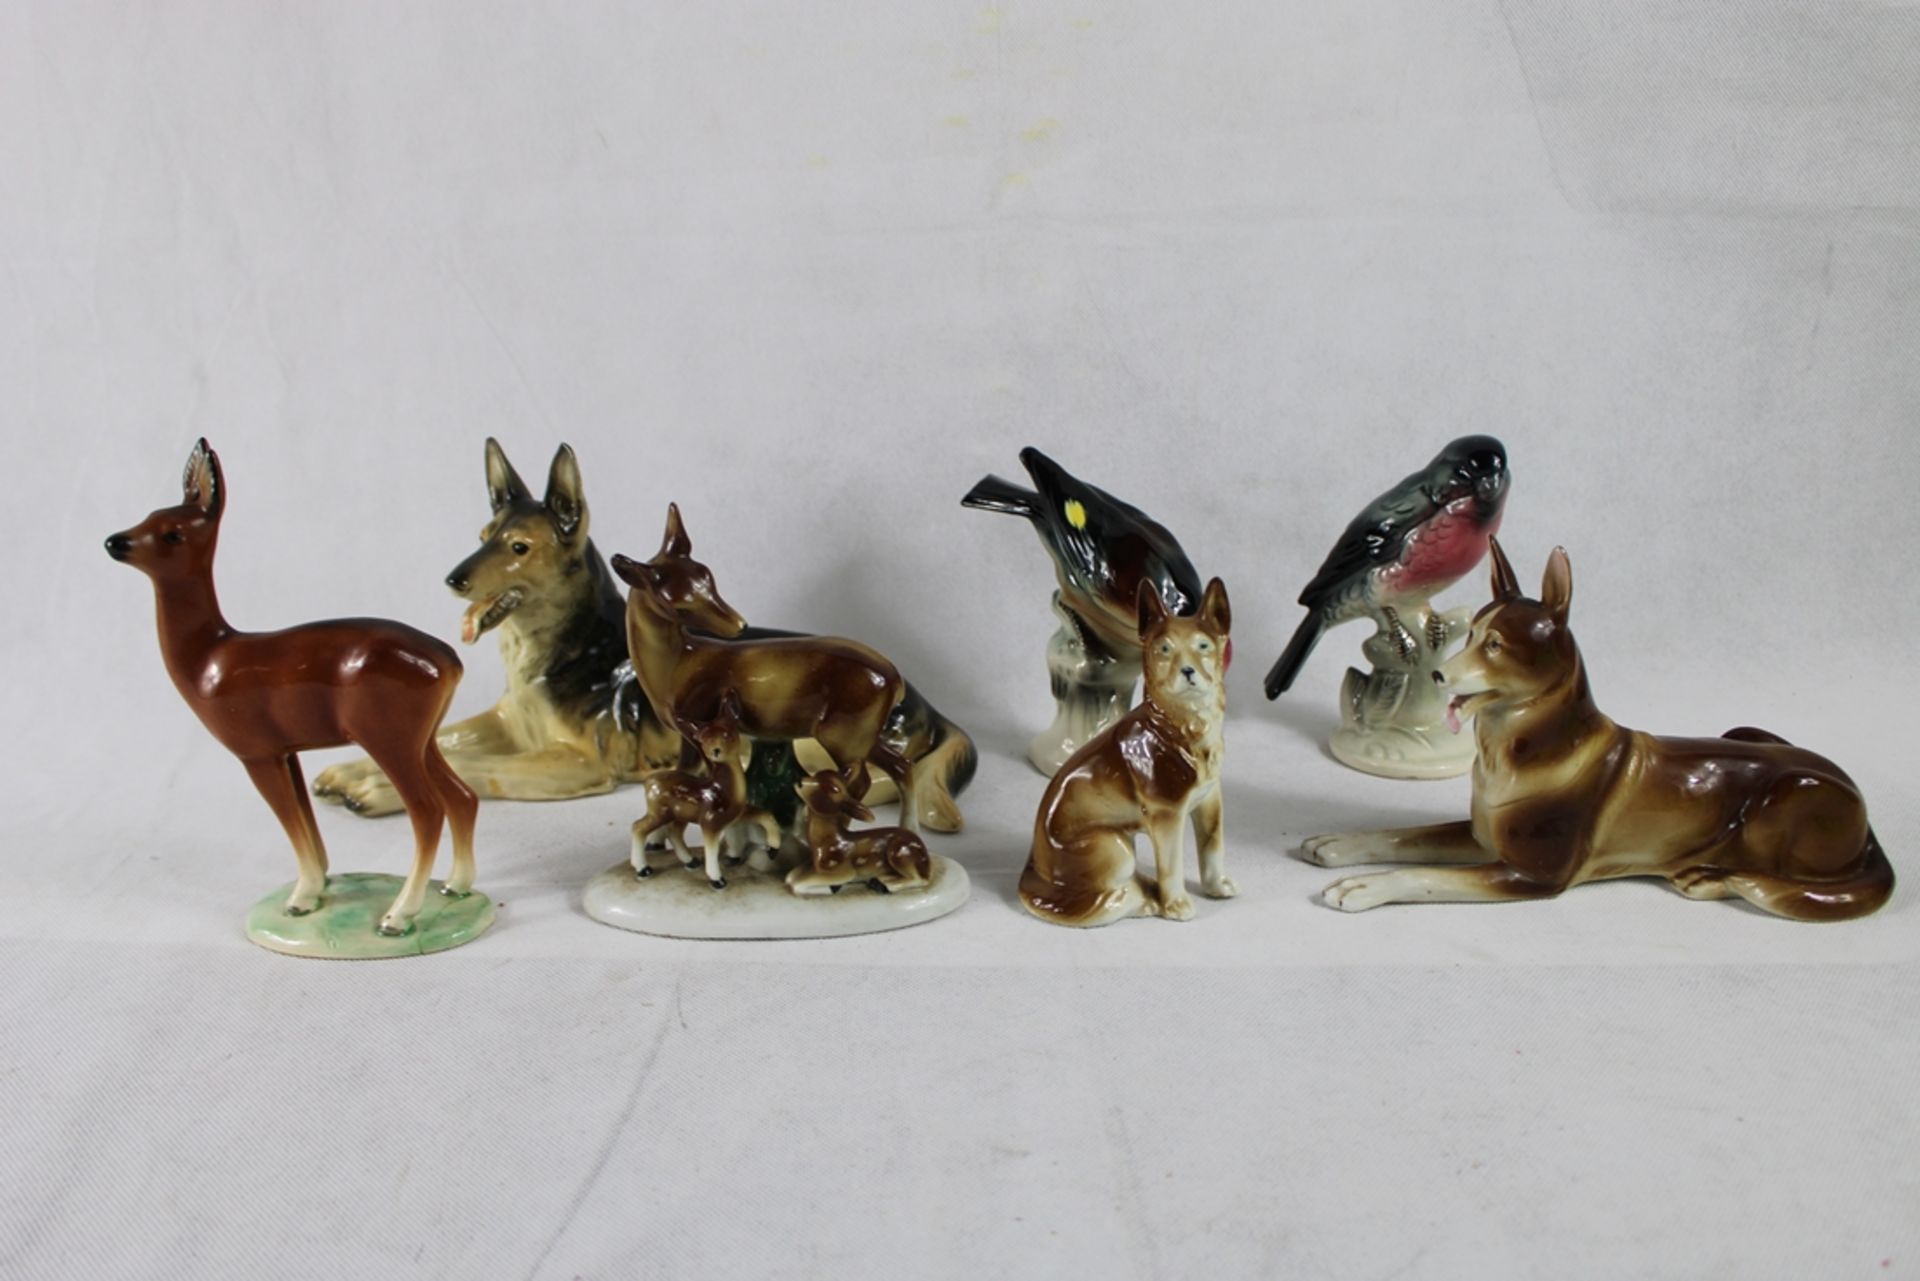 Porzellanfiguren Schäferhunde Rehe Vögel etc. Konvolut 8 St., vereinzelt Beschädigungen möglich - Image 2 of 3